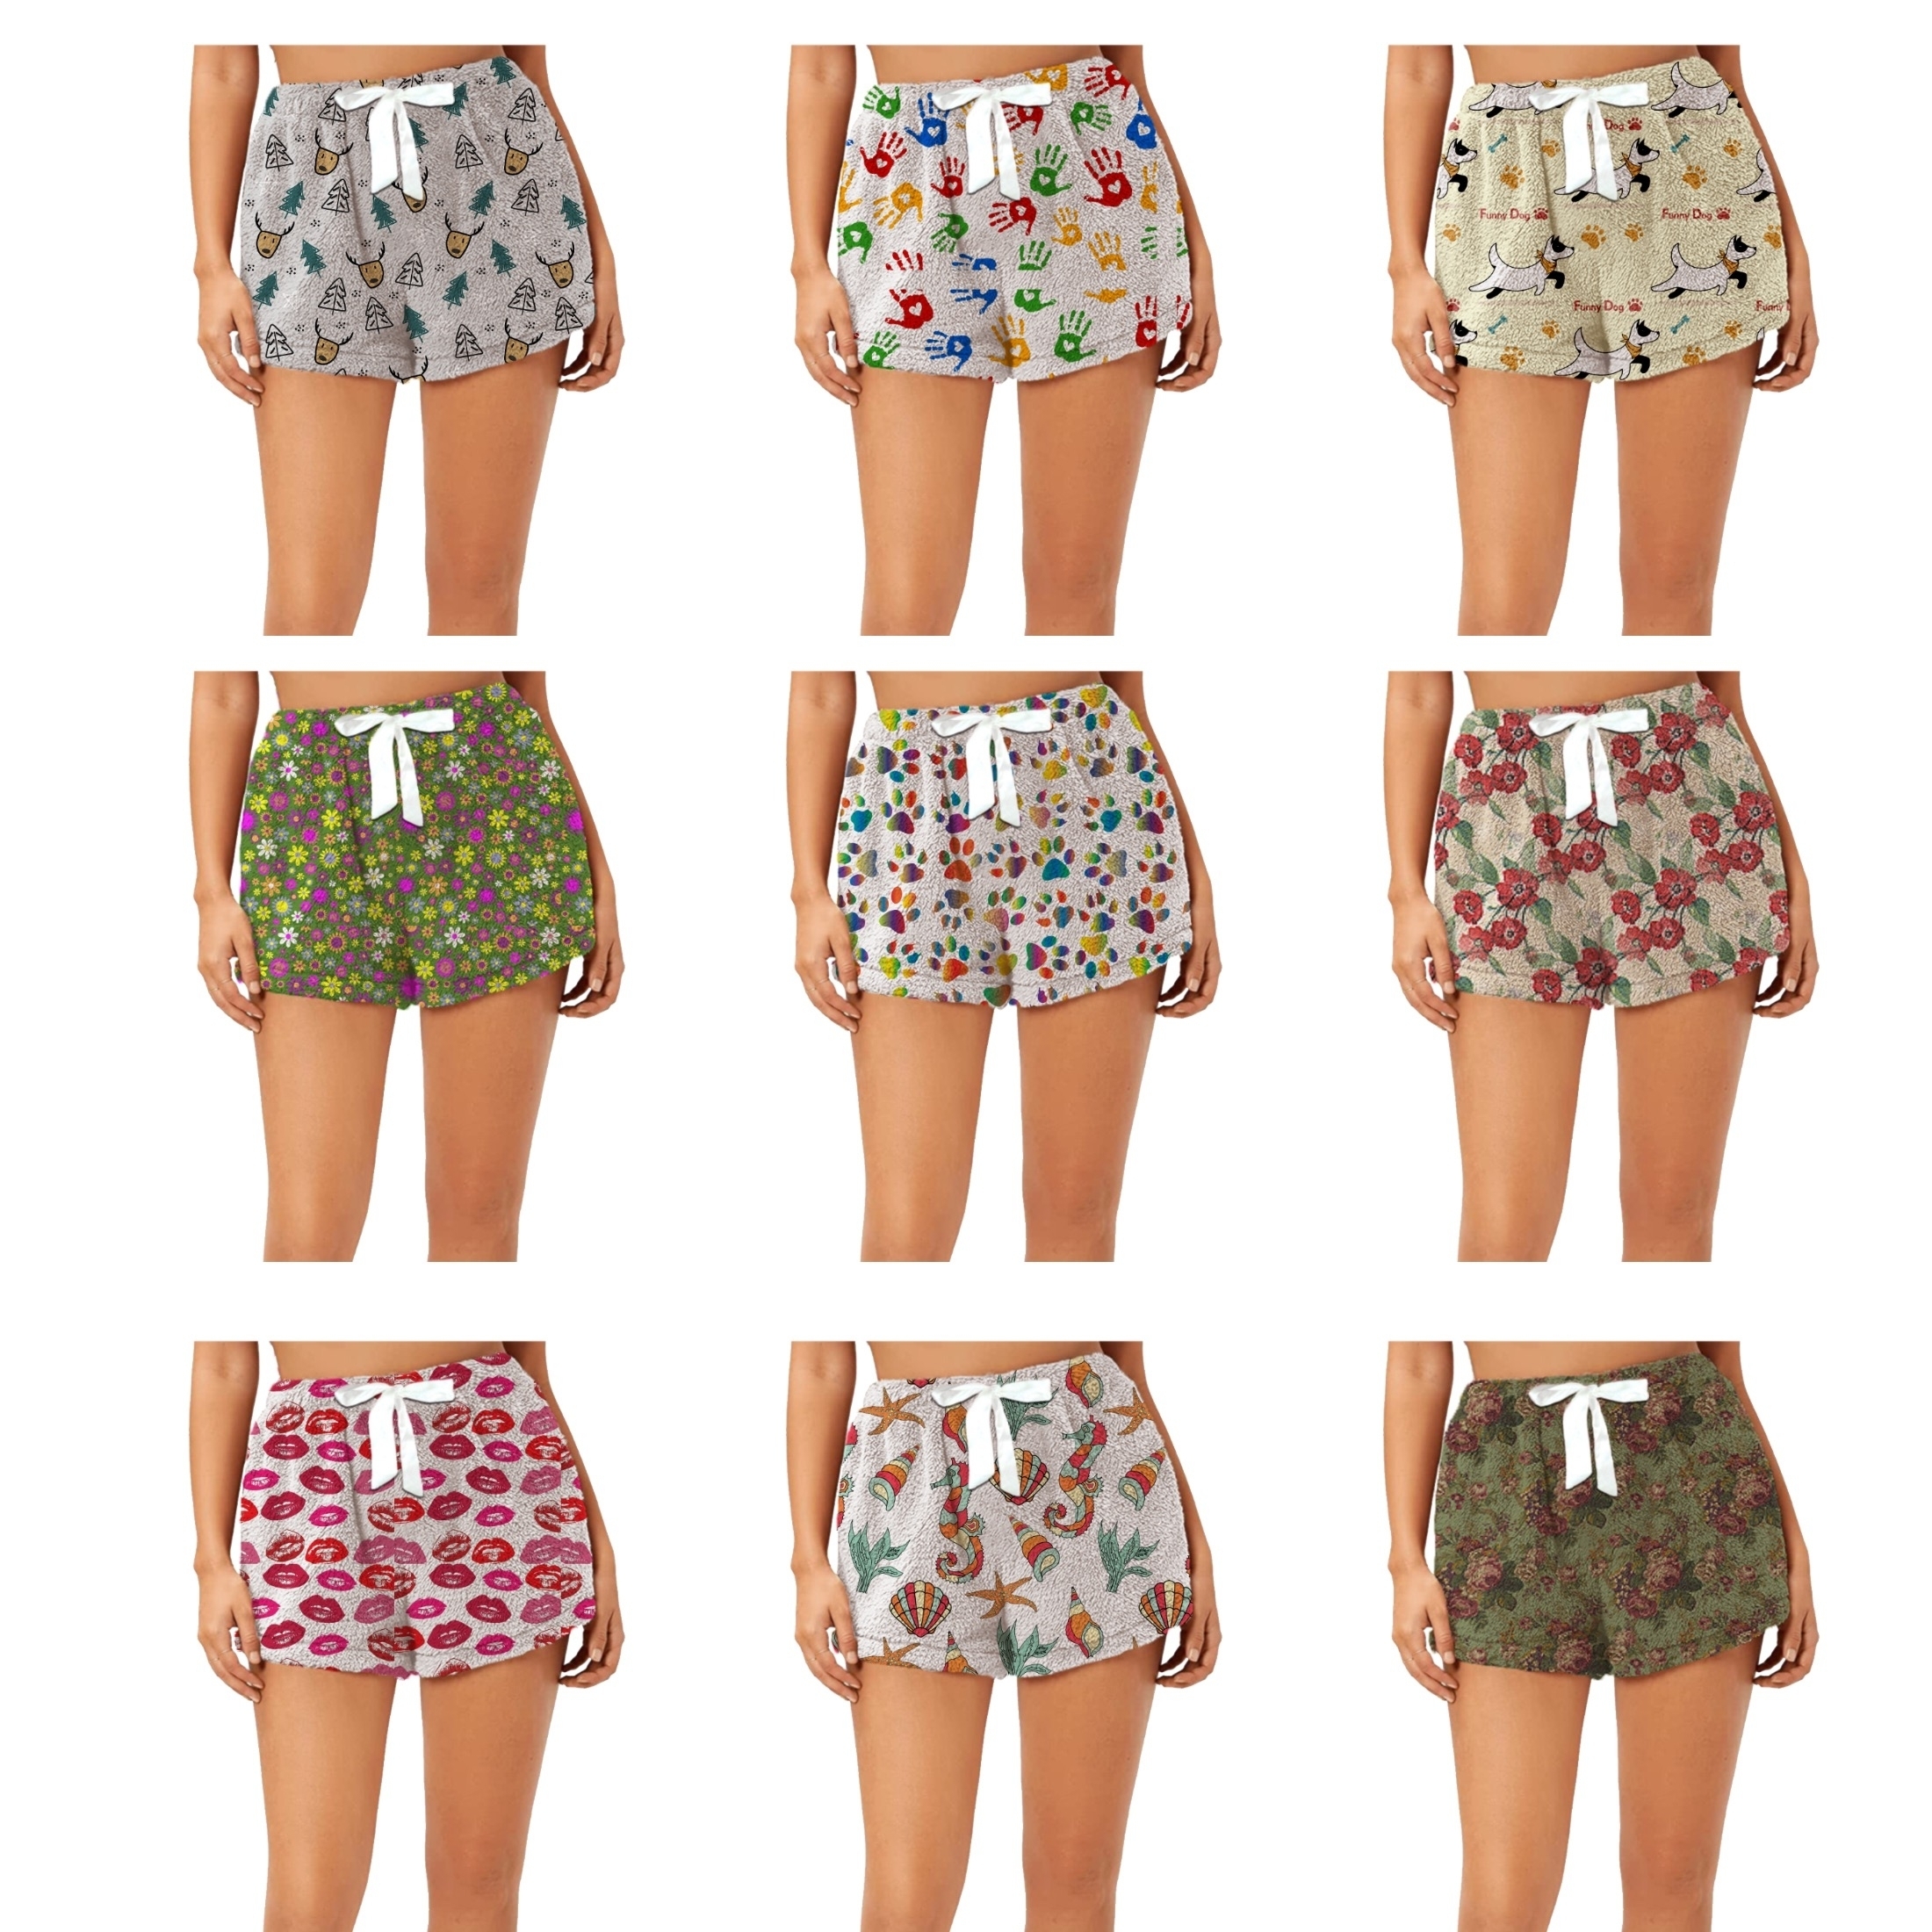 3-Pack: Women's Super Soft Micro Fleece Ultra Plush Printed Pajama Shorts - Small